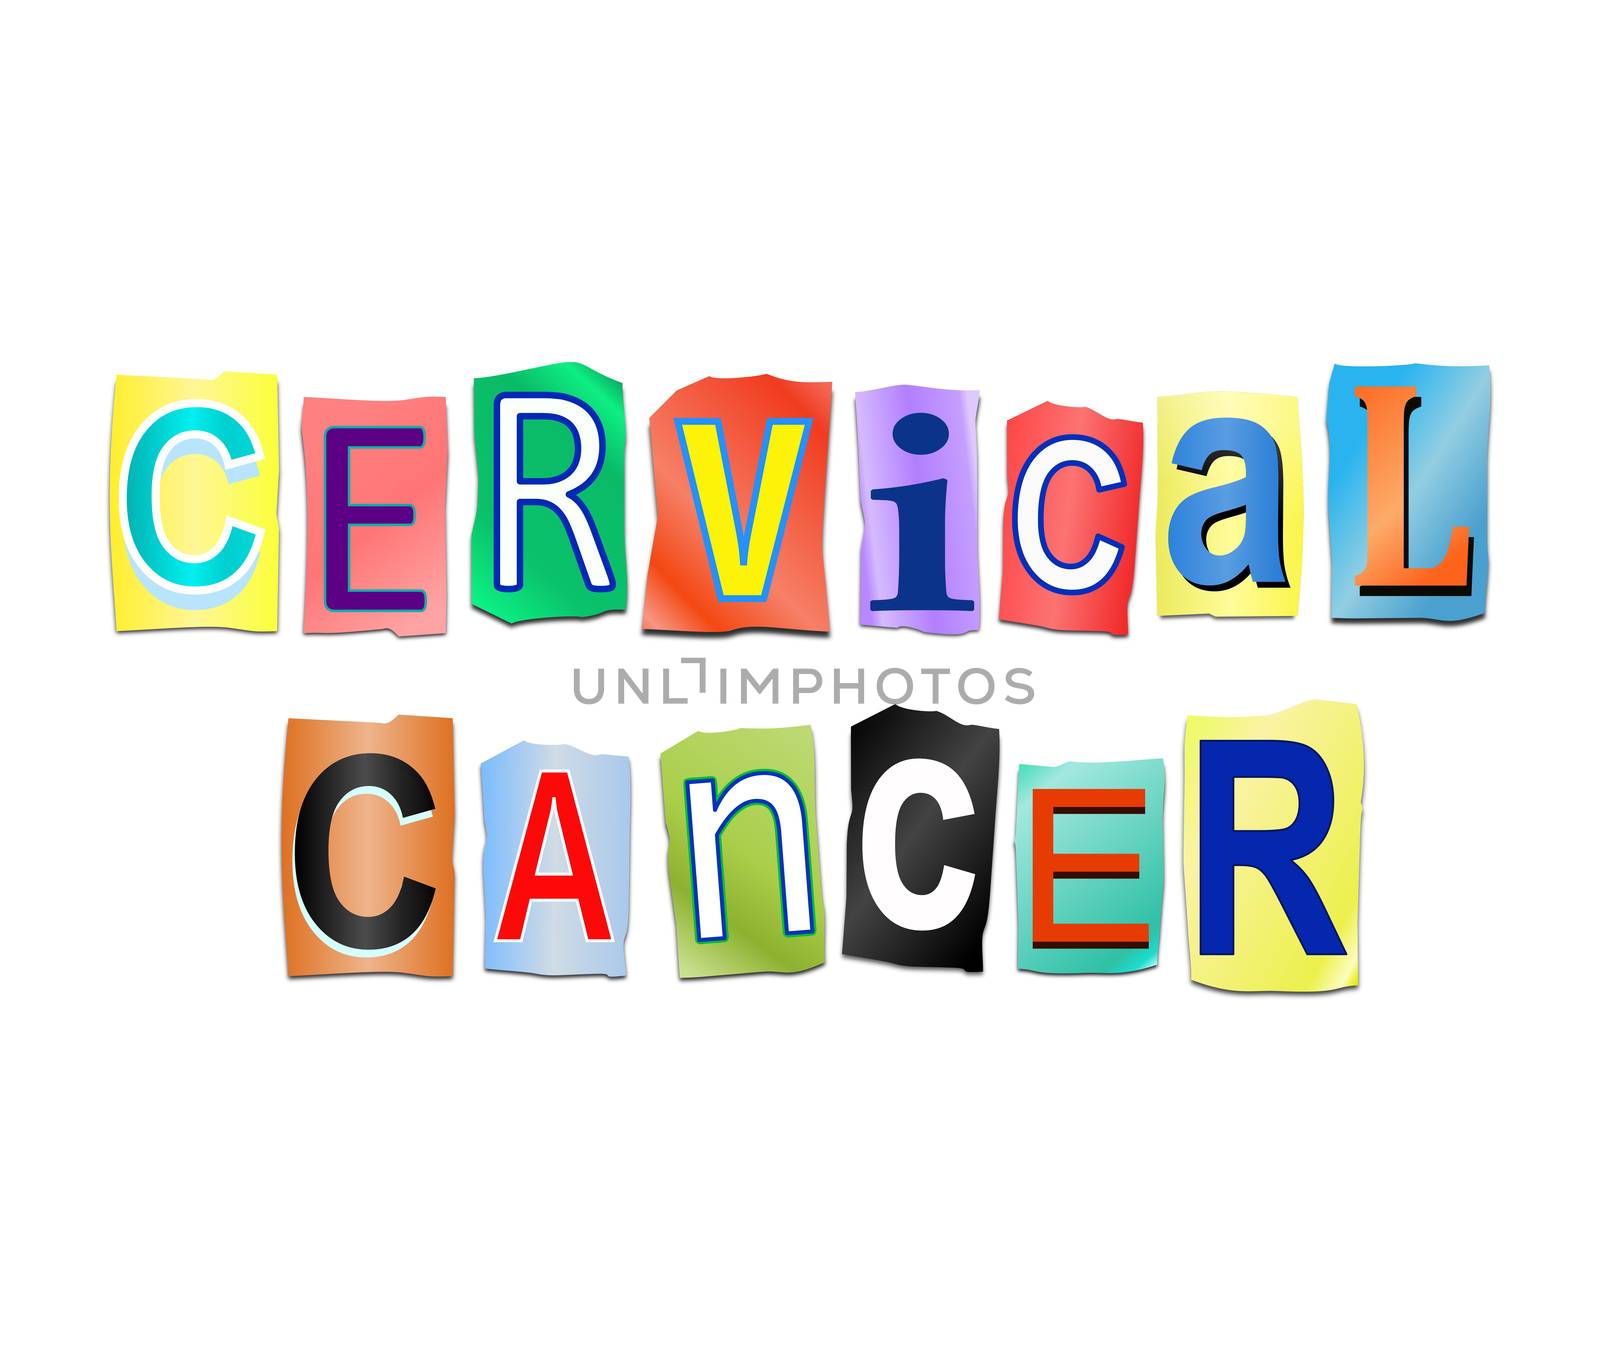 Cervical cancer concept. by 72soul